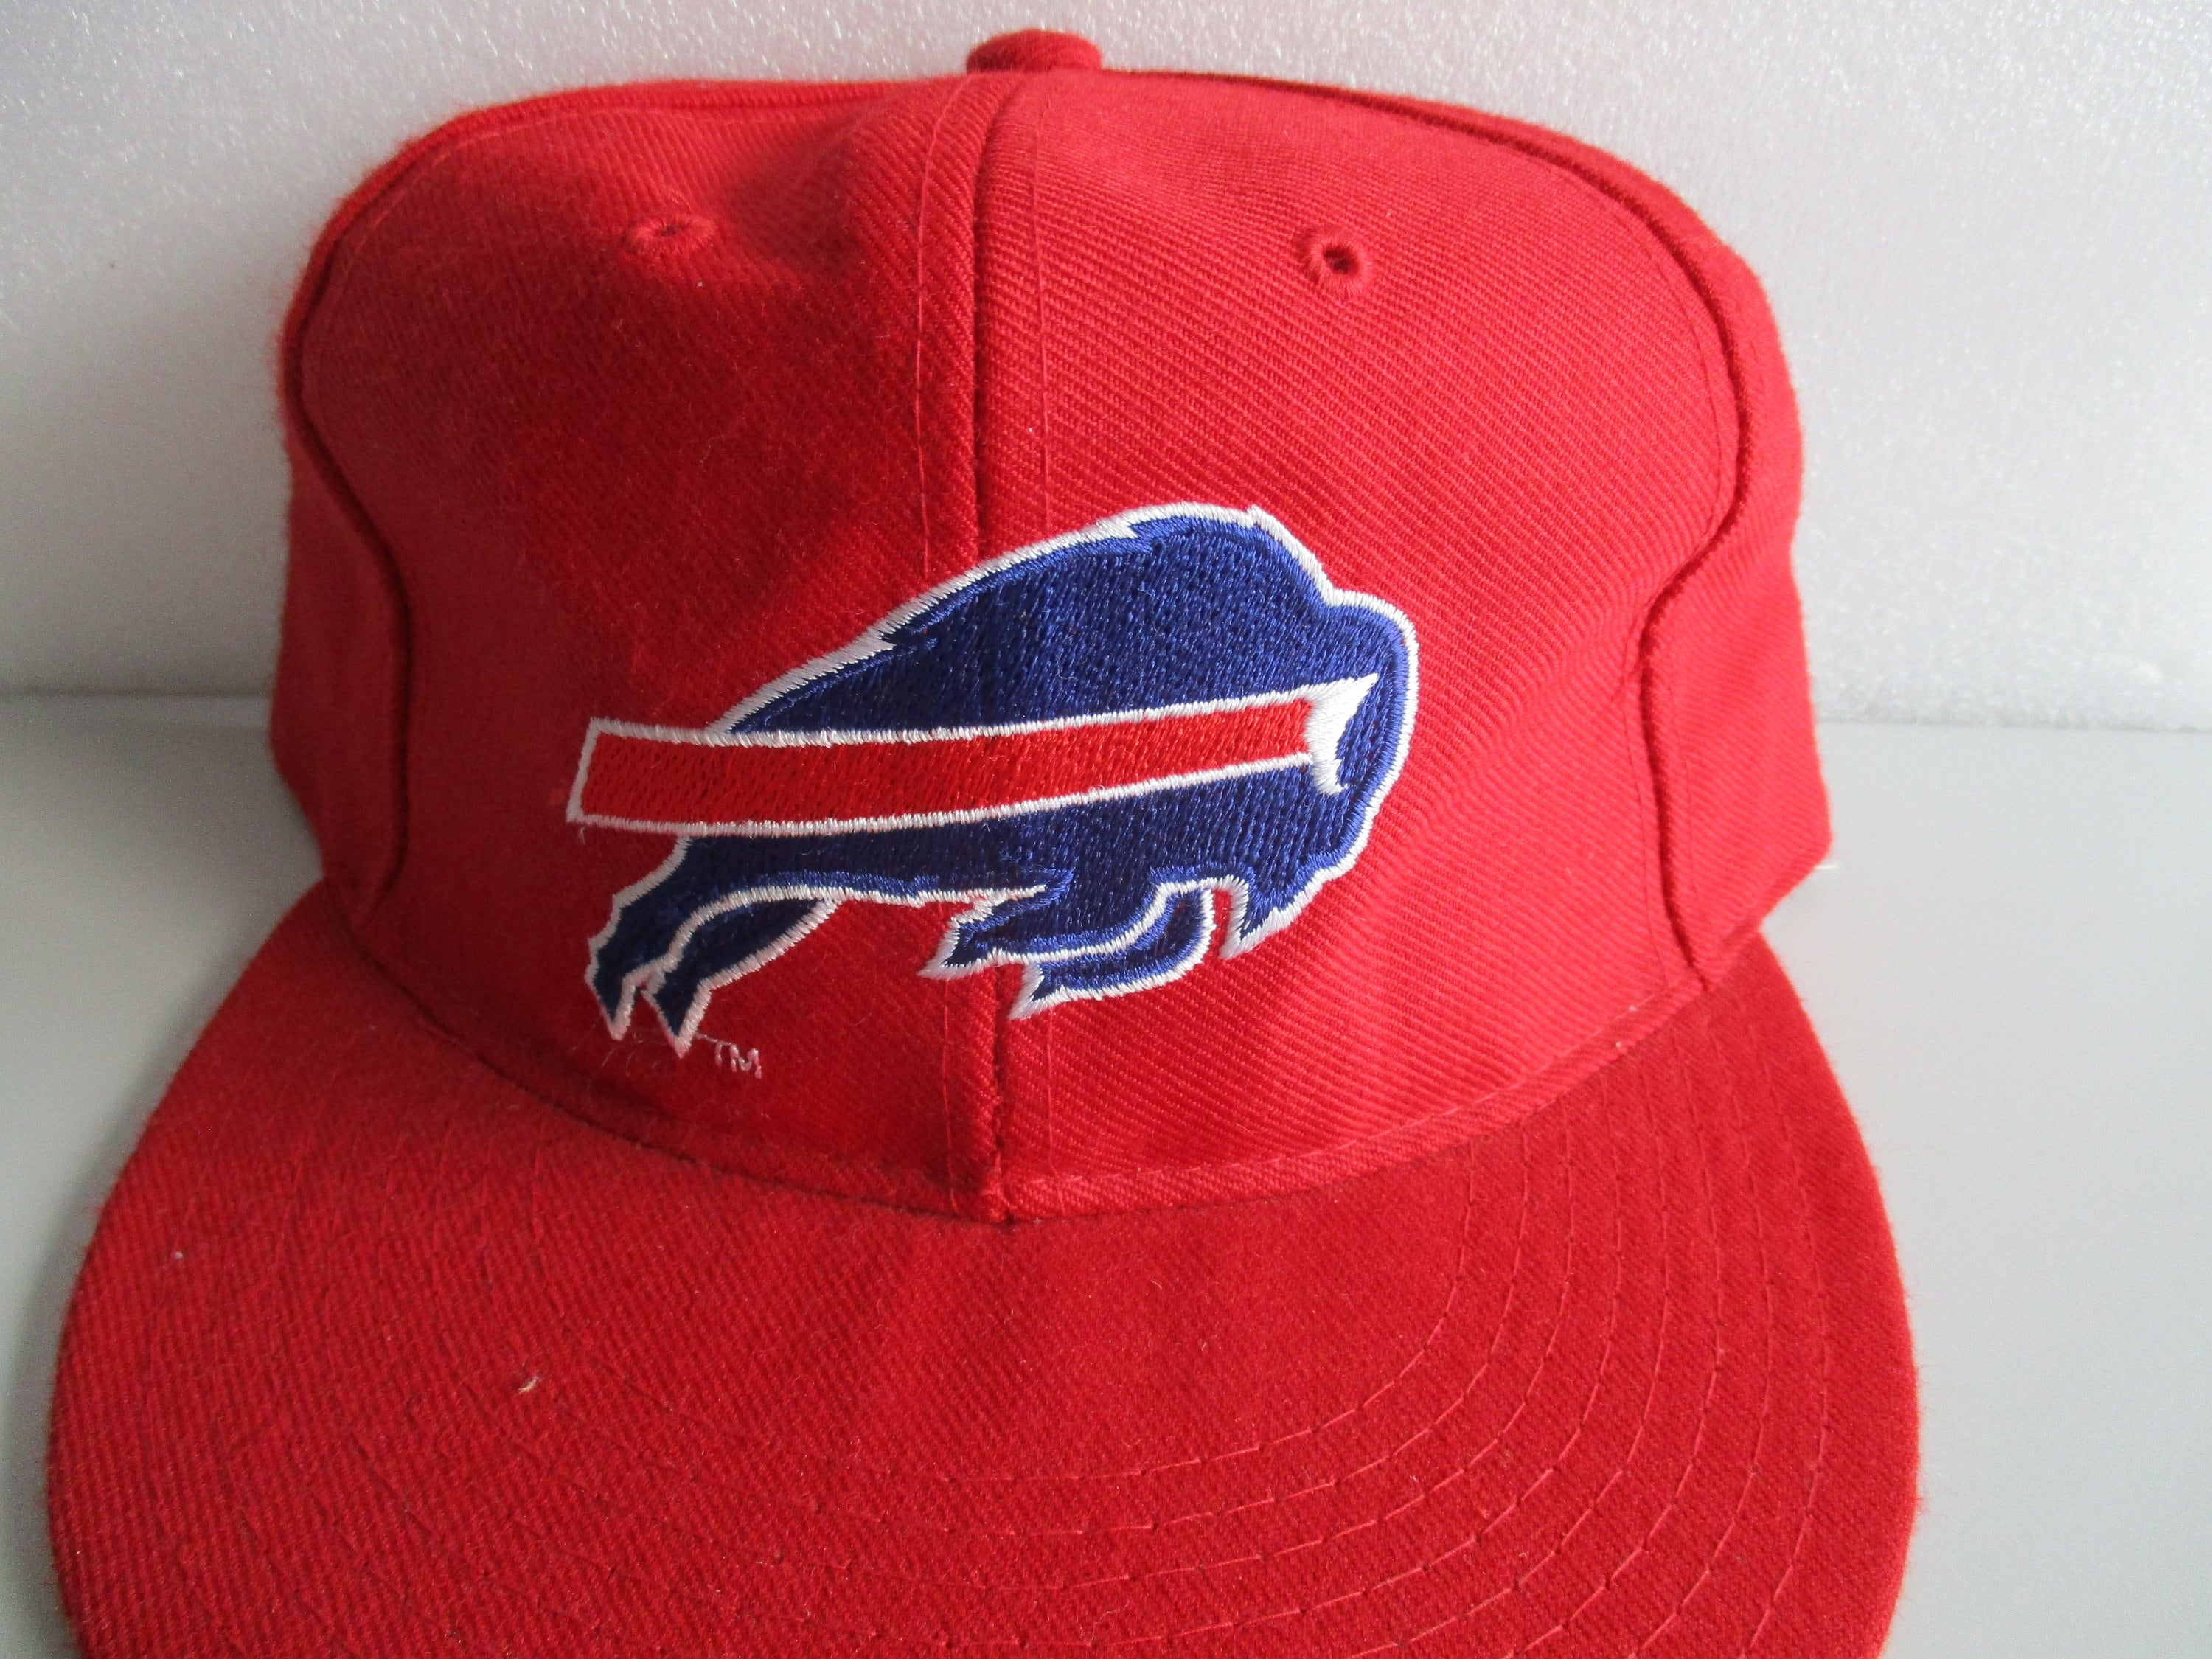 buffalo bills hat fitted